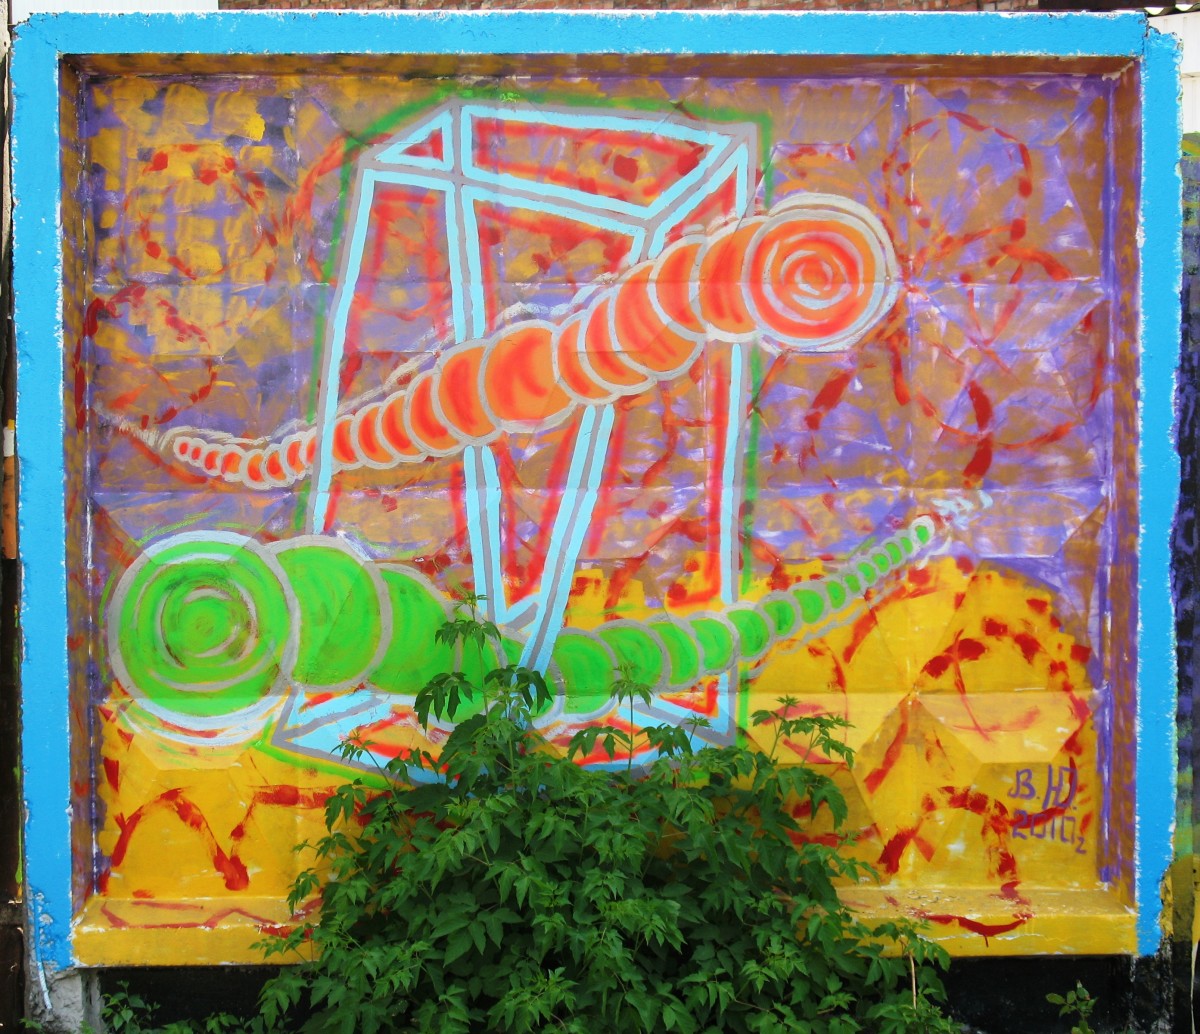 Mongolian death worm Olghoi on graffiti. Kharkov, 2009